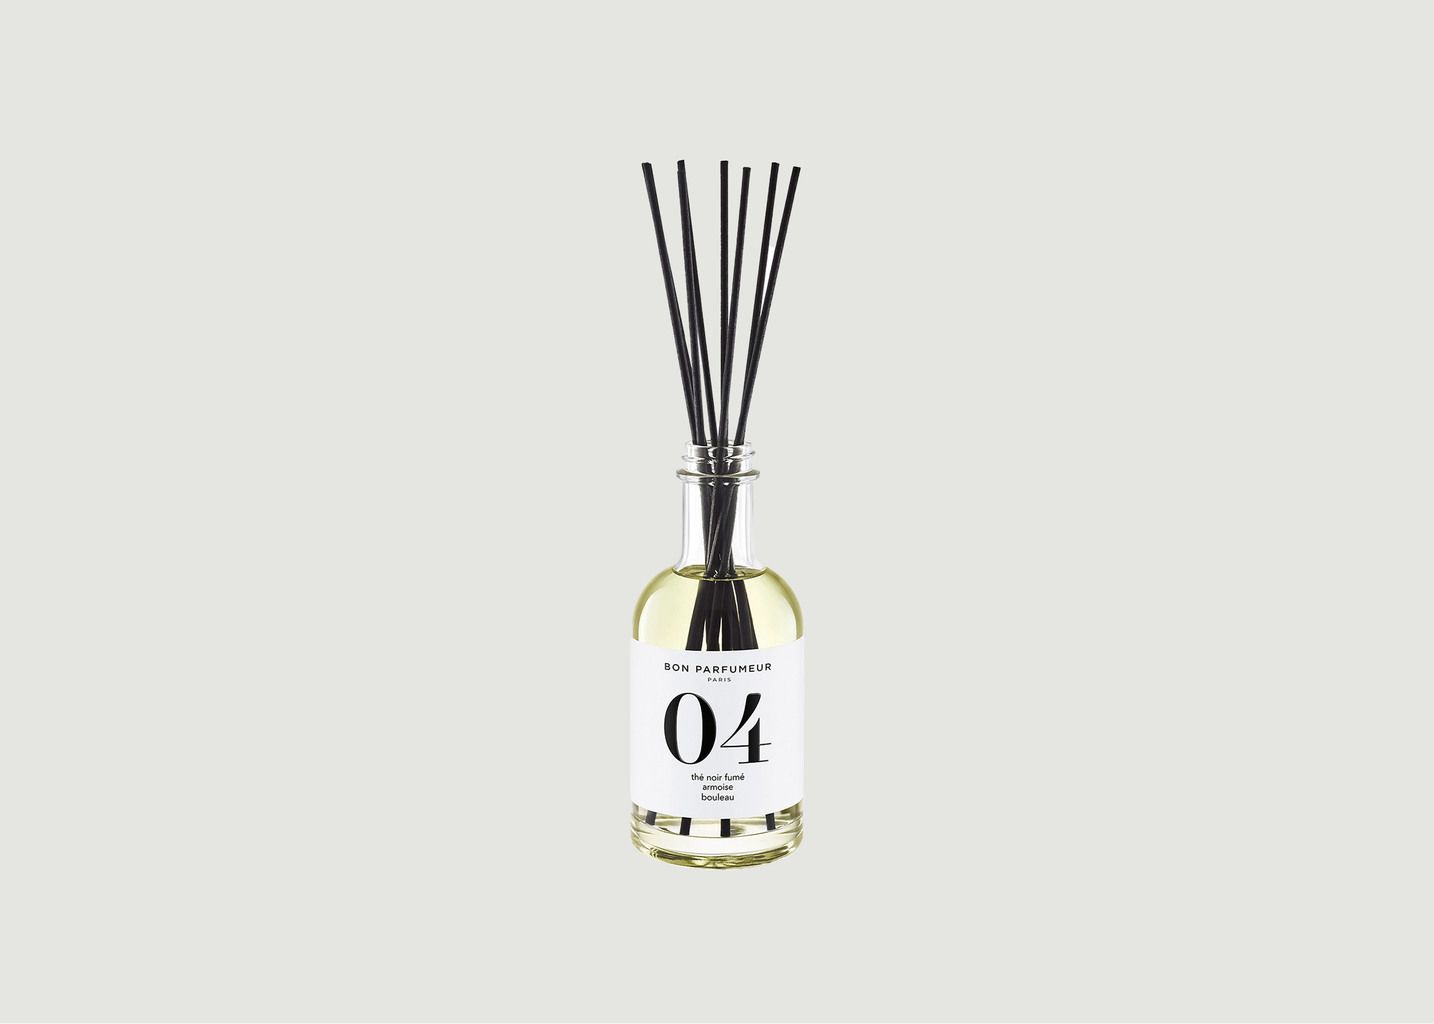 Home Fragrance Diffuser 04 : Smoked Black Tea, Mugwort, Birch - Bon Parfumeur